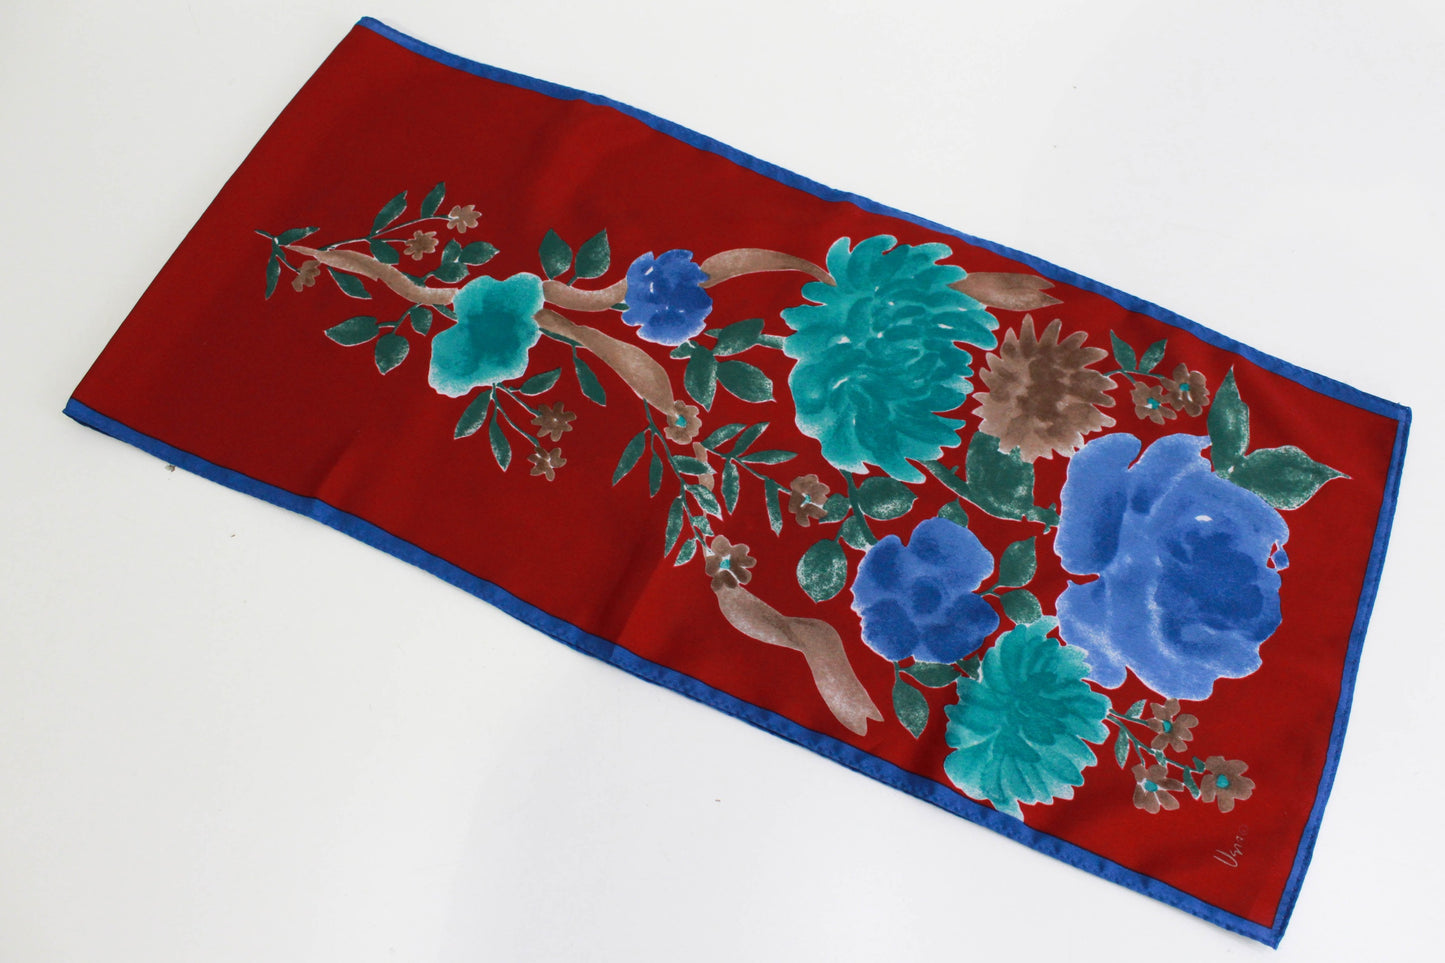 vintage Vera neumann silk rose print scarf